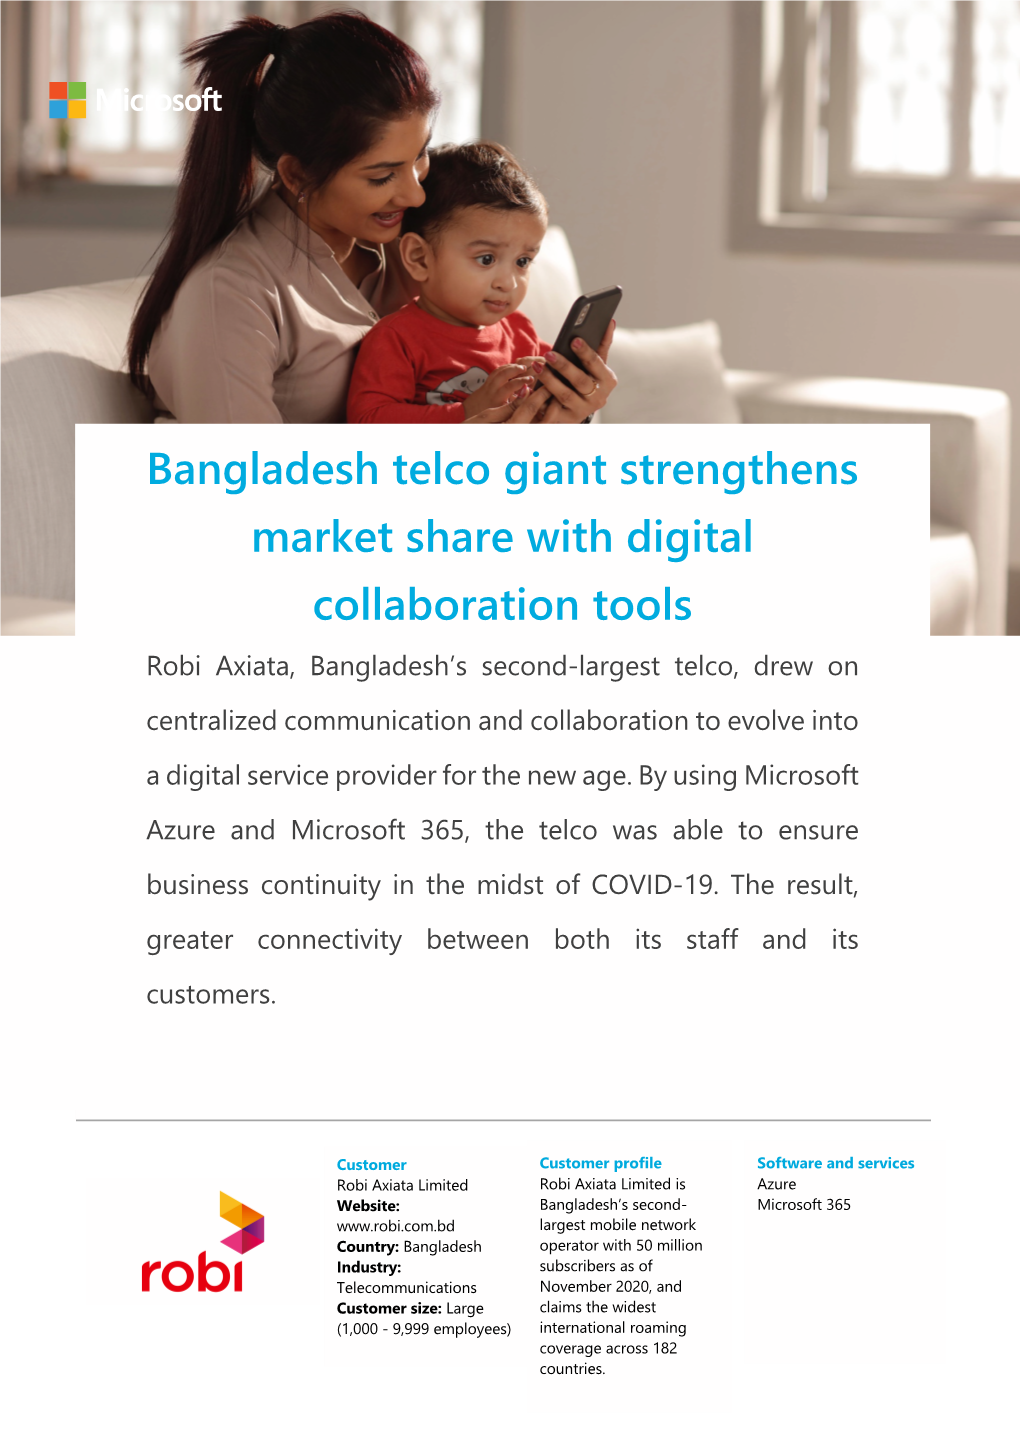 Bangladesh Telco Giant Strengthens Market Share with Digital